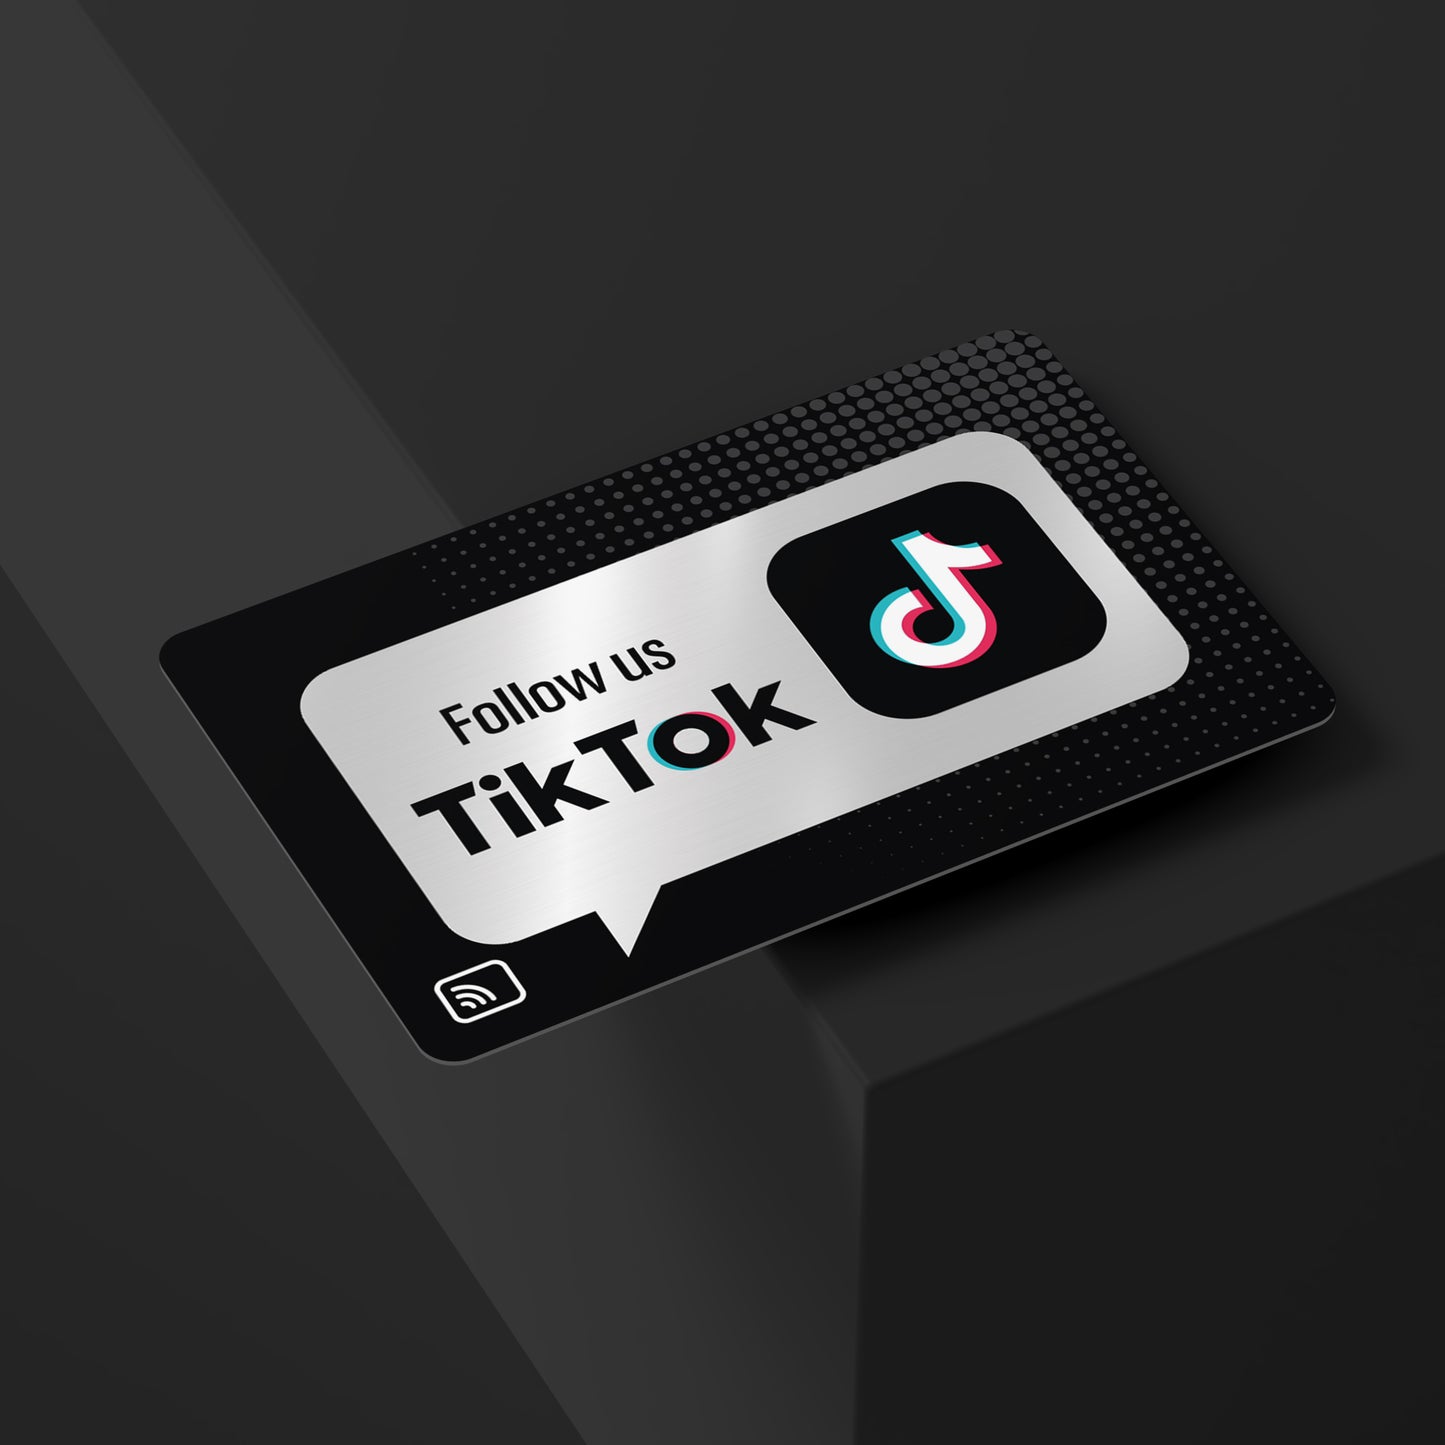 TikTok NFC Card